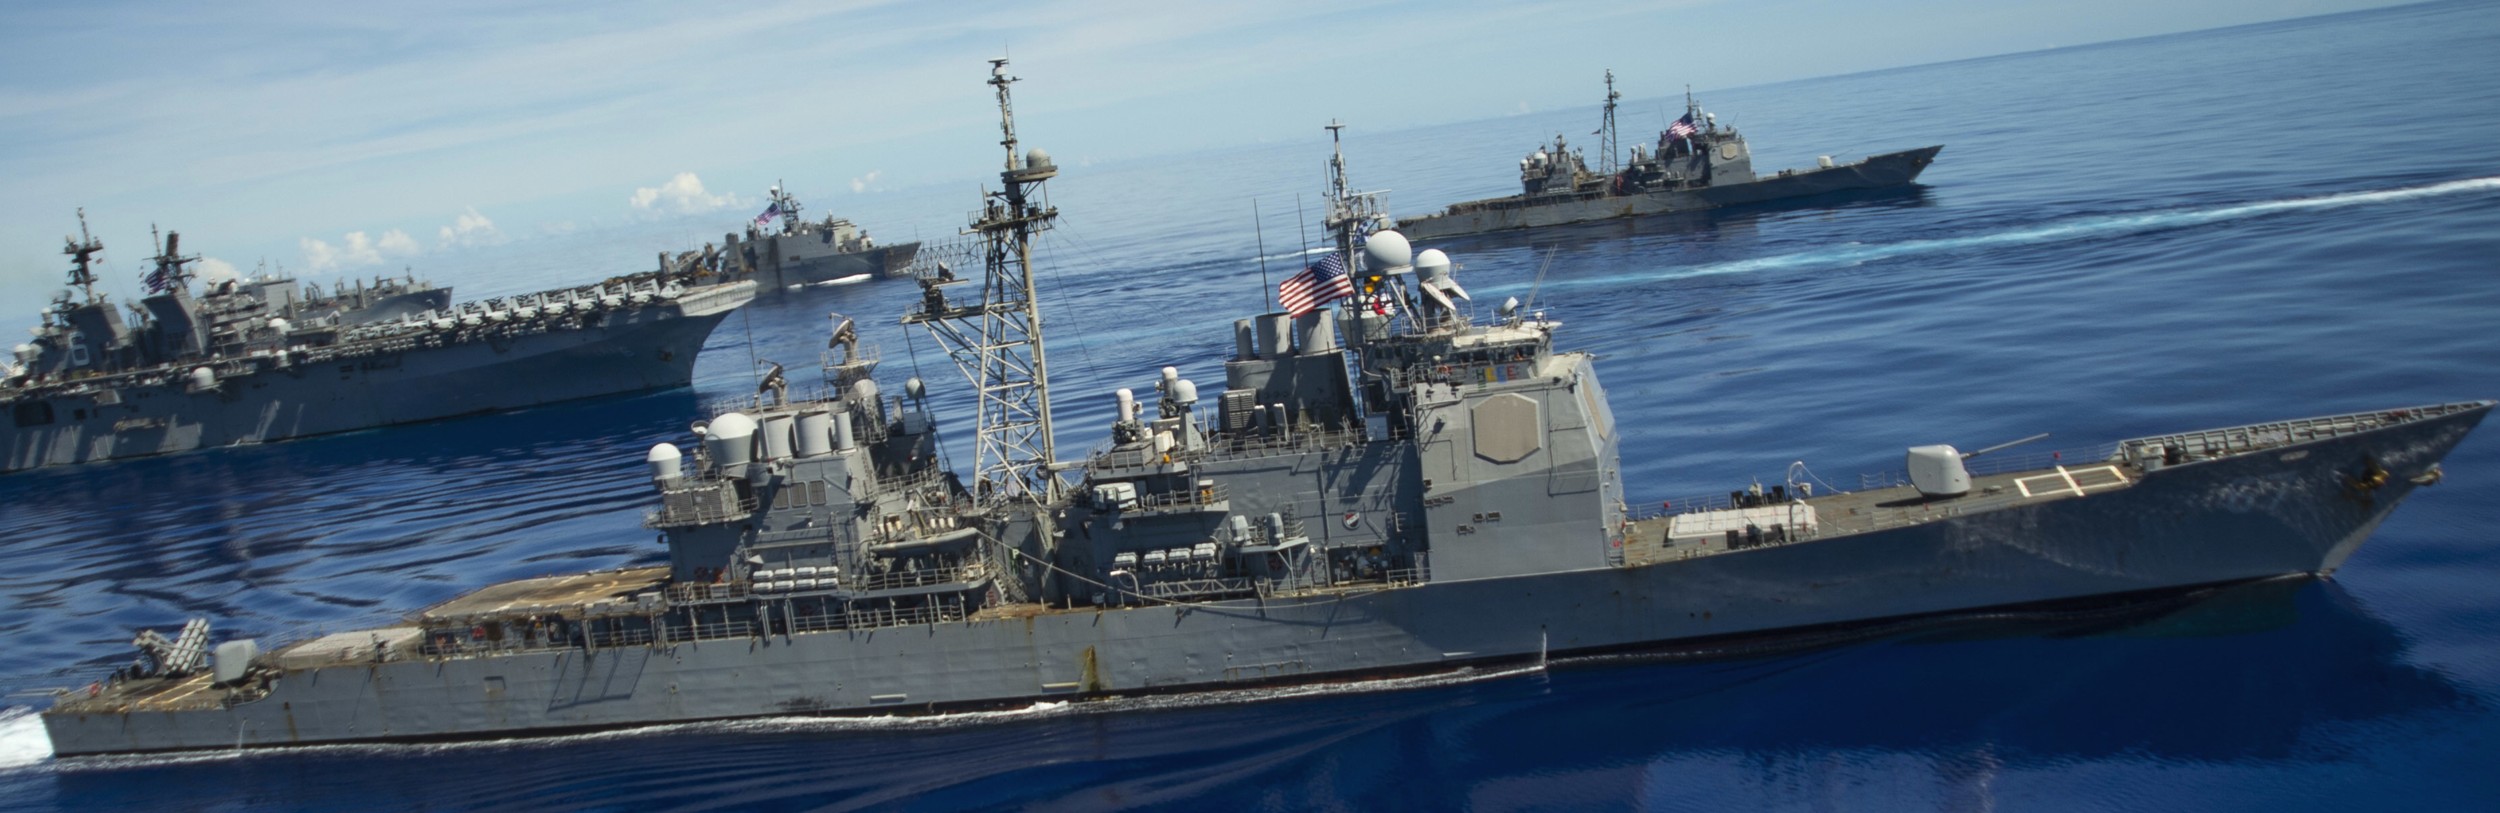 cg-67 uss shiloh ticonderoga class guided missile cruiser aegis us navy valiant shield 2020 71